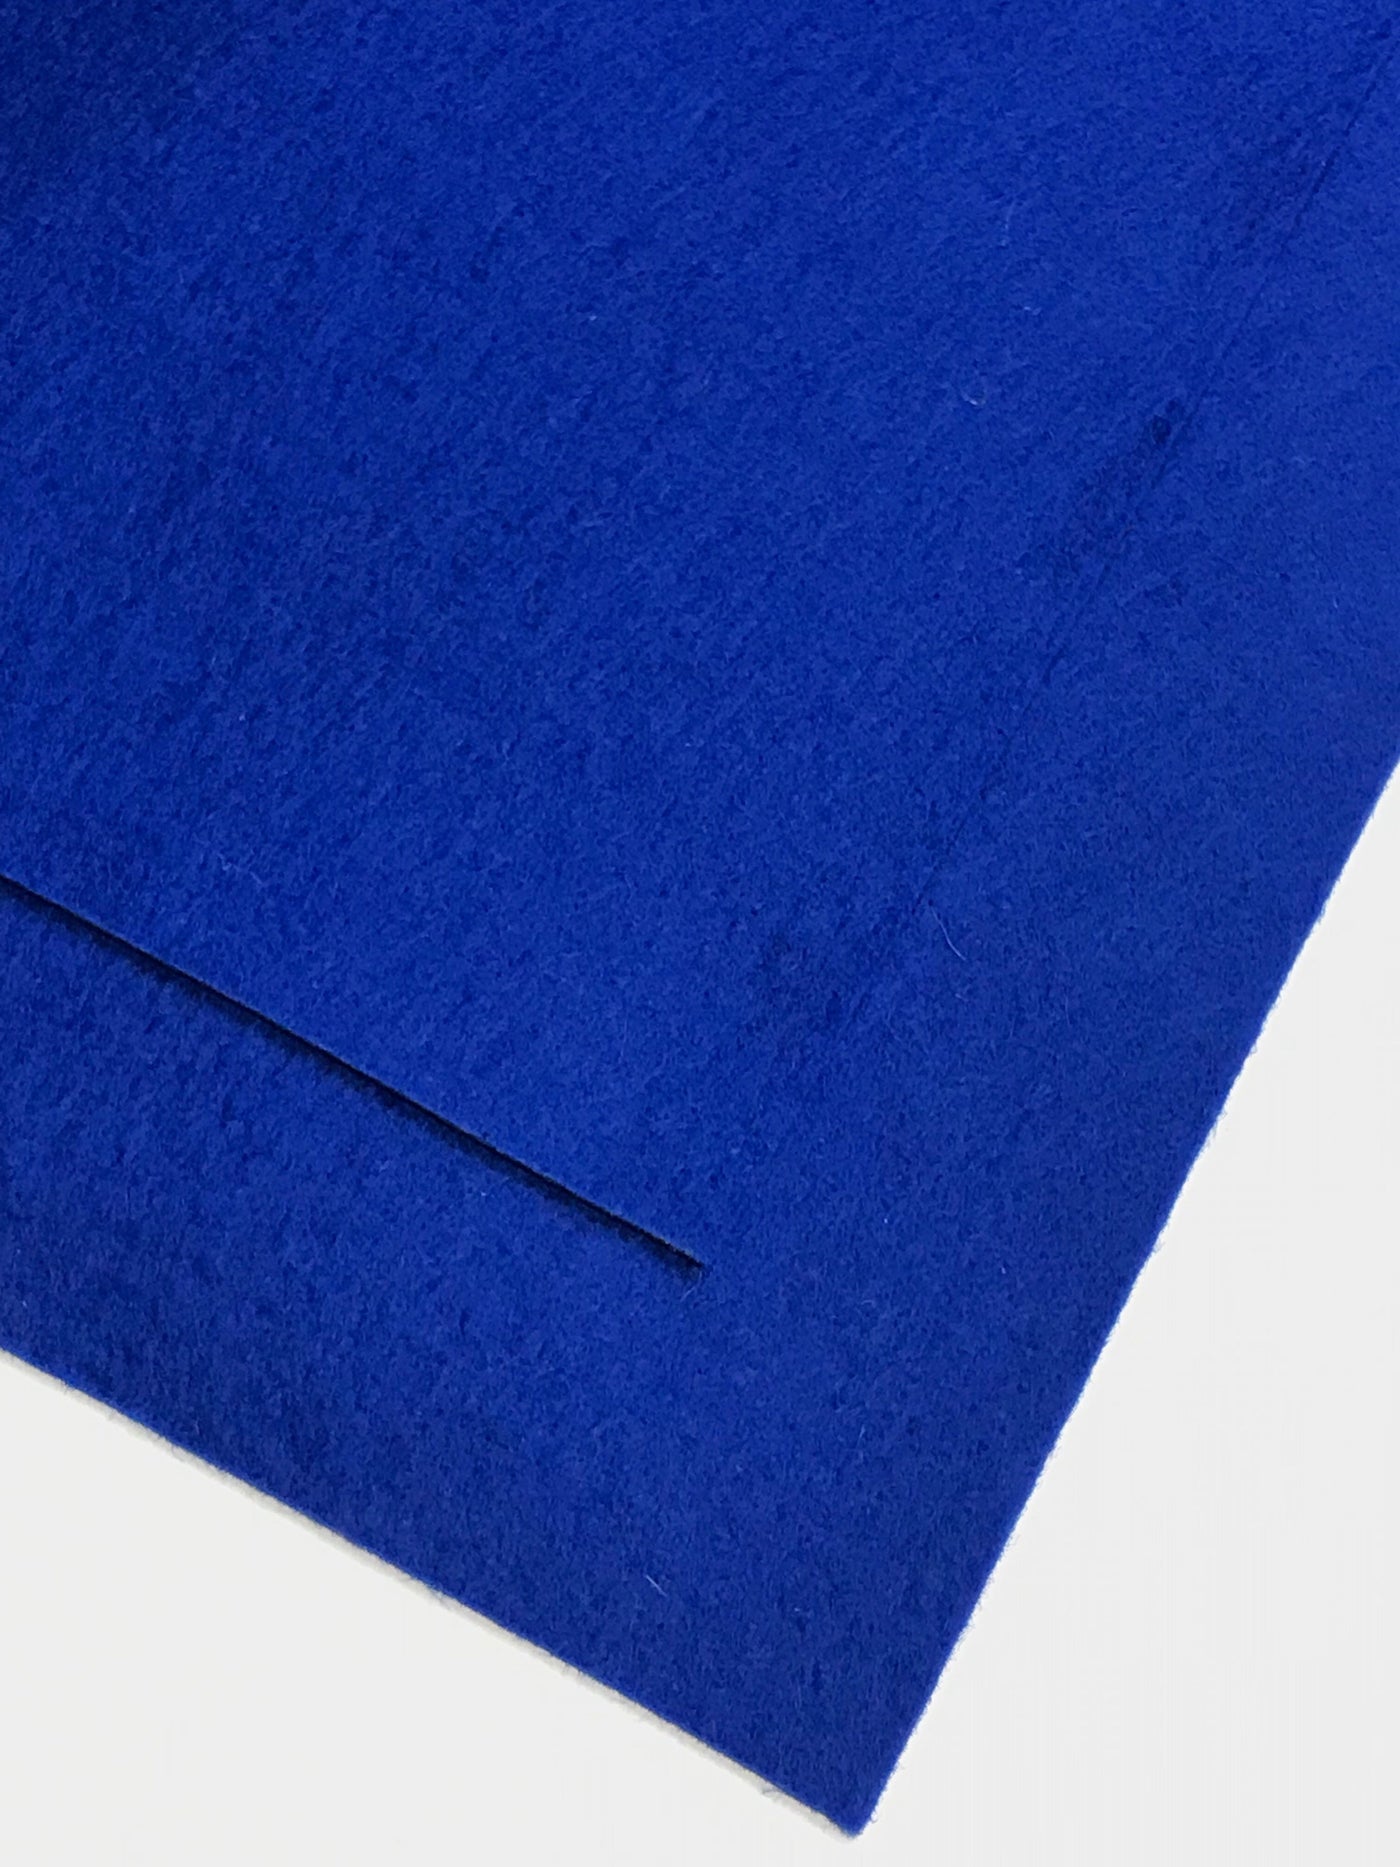 1mm Royal Blue Merino Wool Felt 8 x 11"  Sheet - No. 59